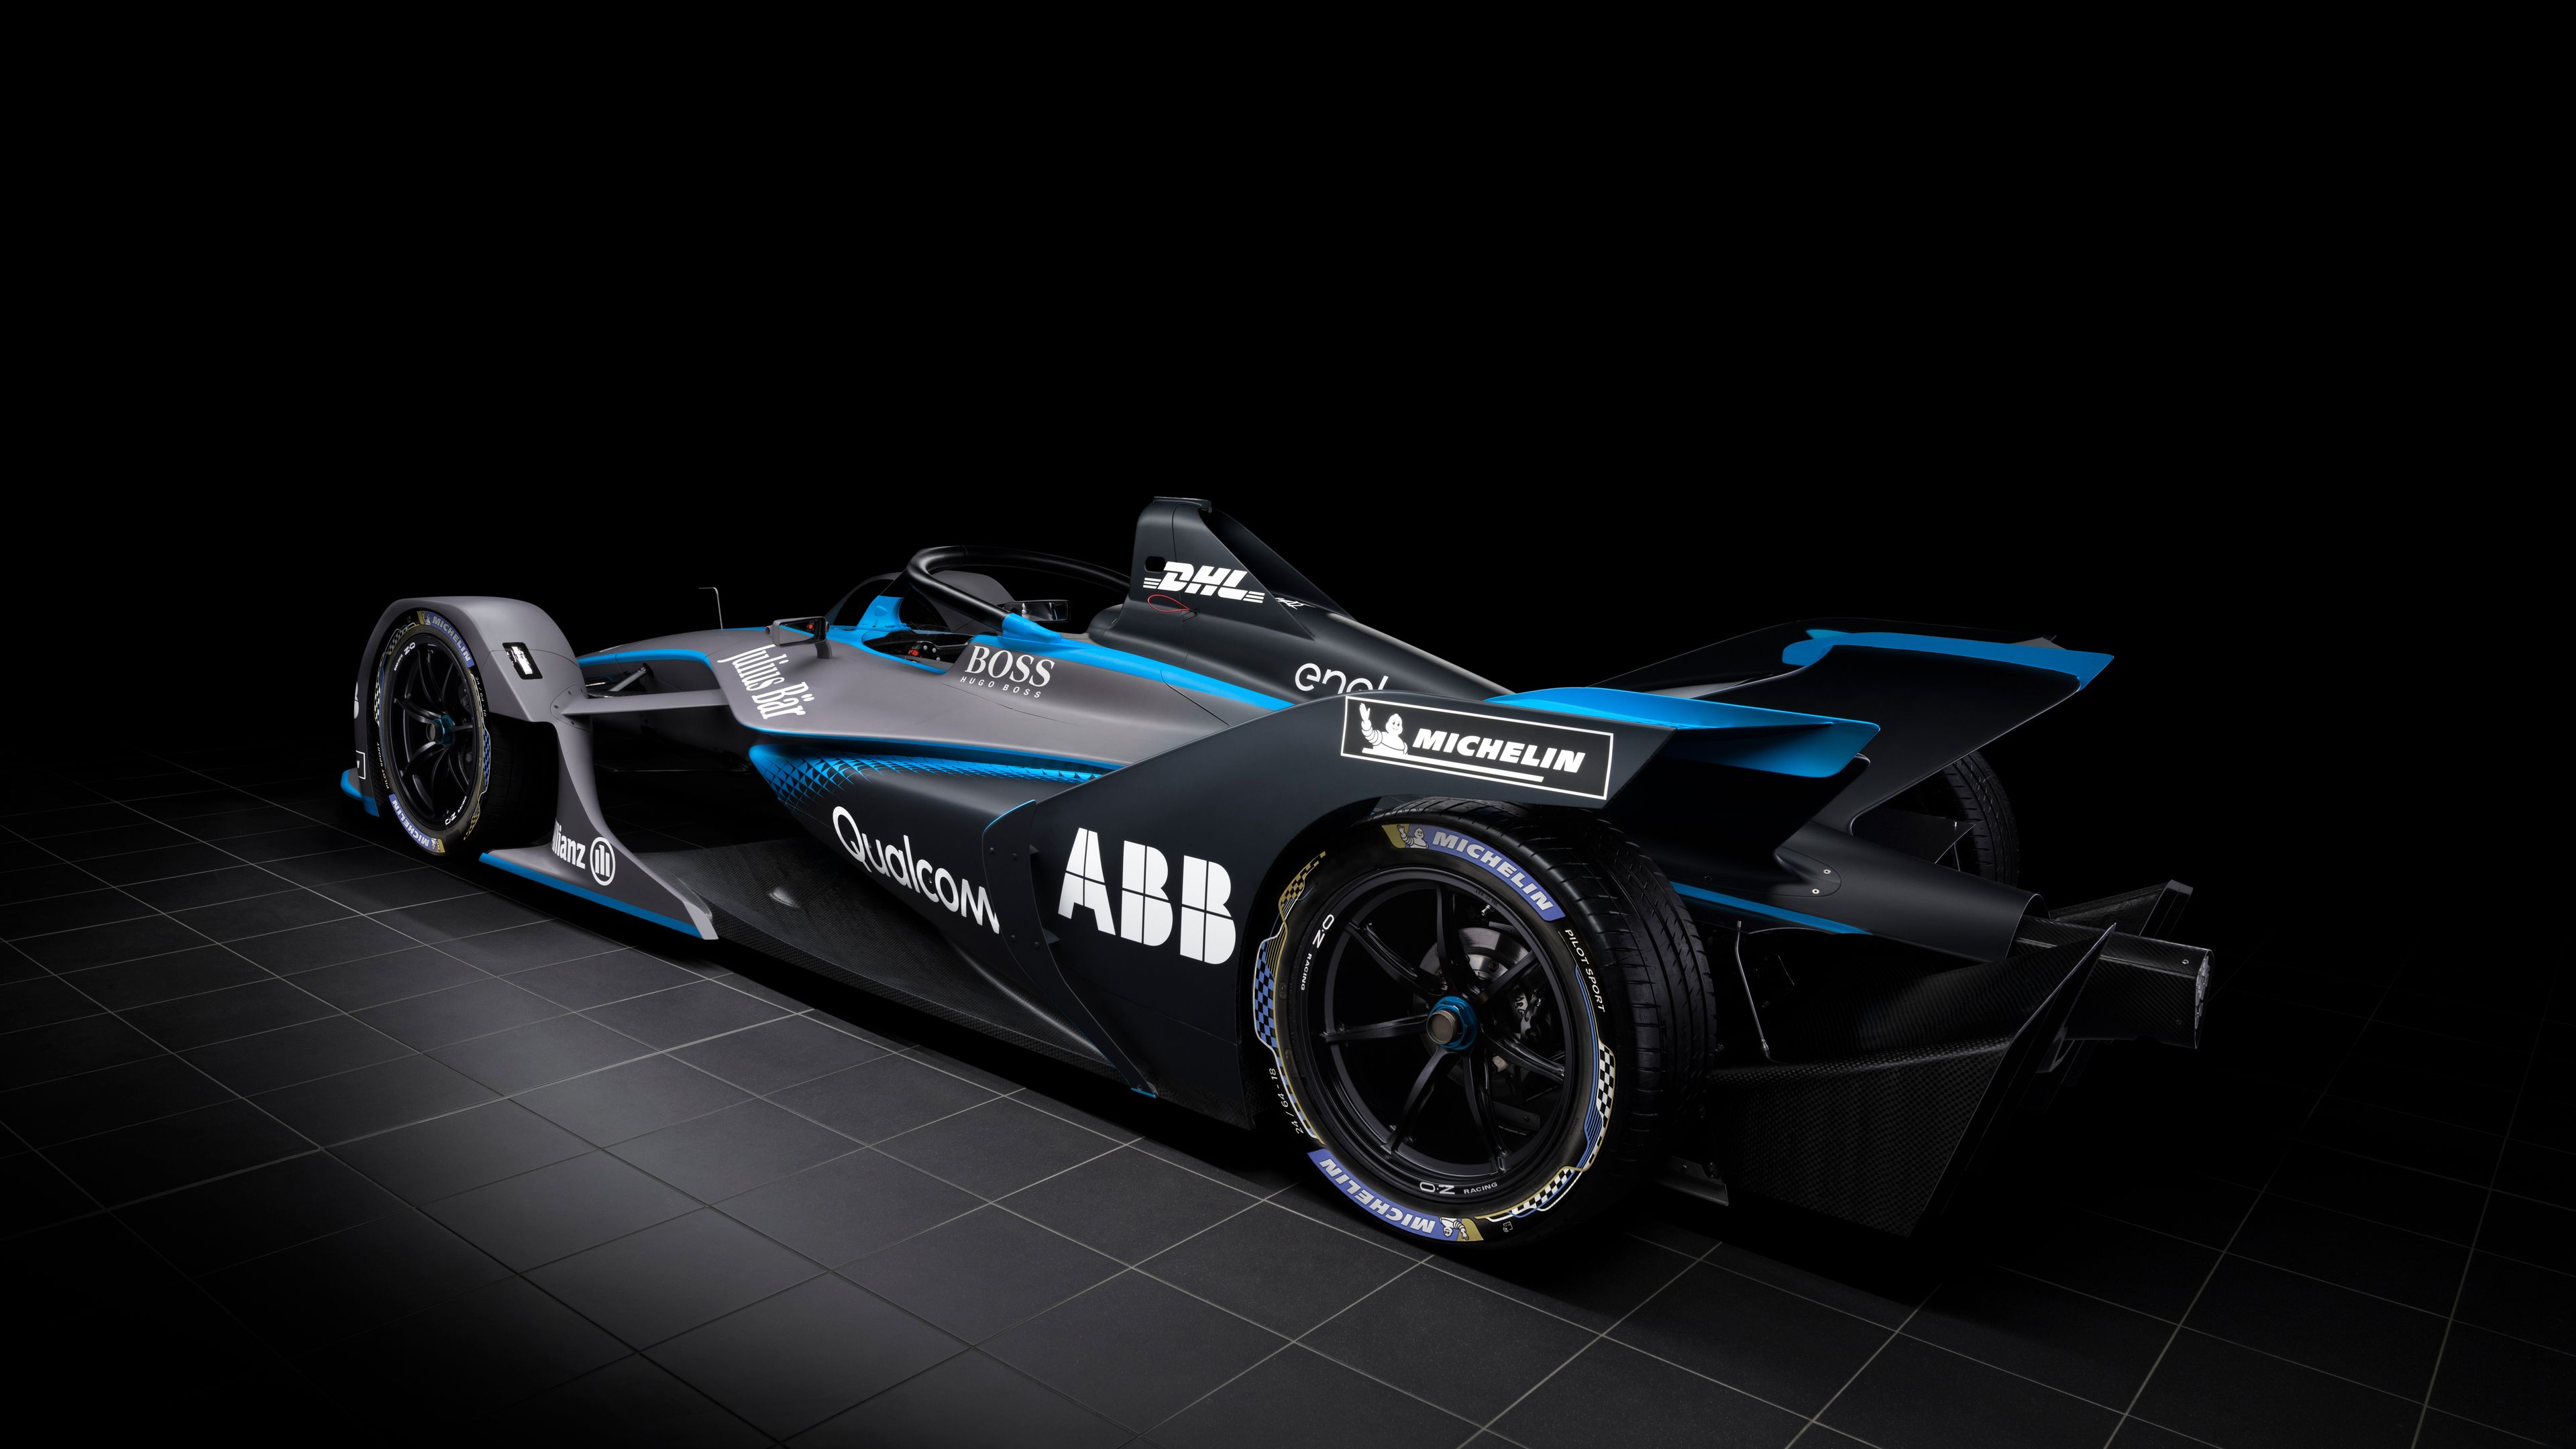 FIA Formula E Gen2 Race Car 4k HD 4k Wallpaper, Image, Background, Photo and Picture